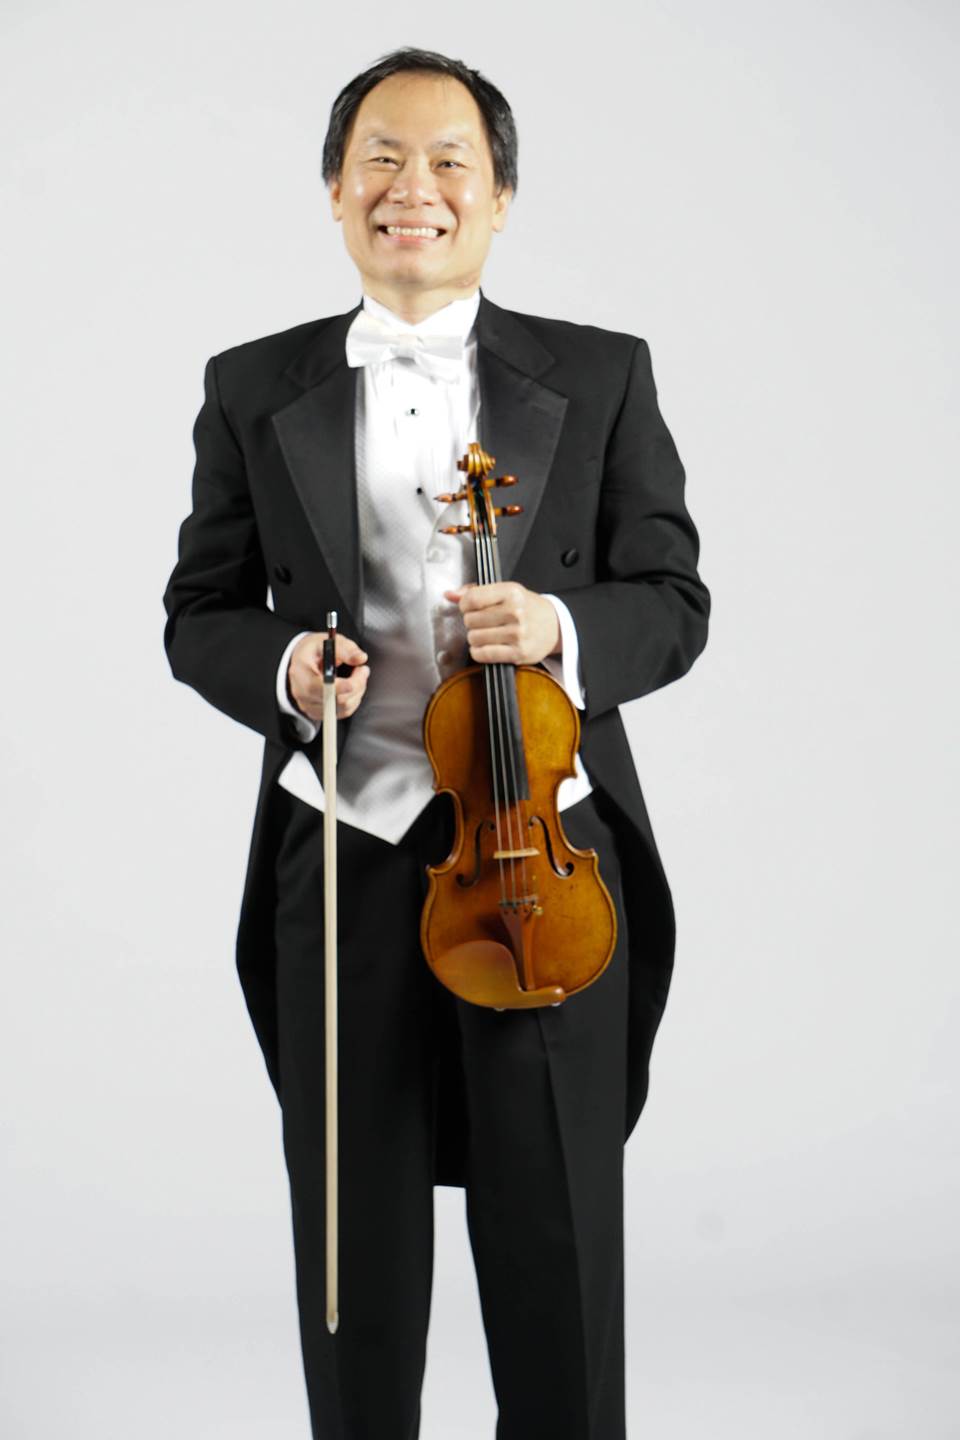 Swang Lin, Associate Concertmaster